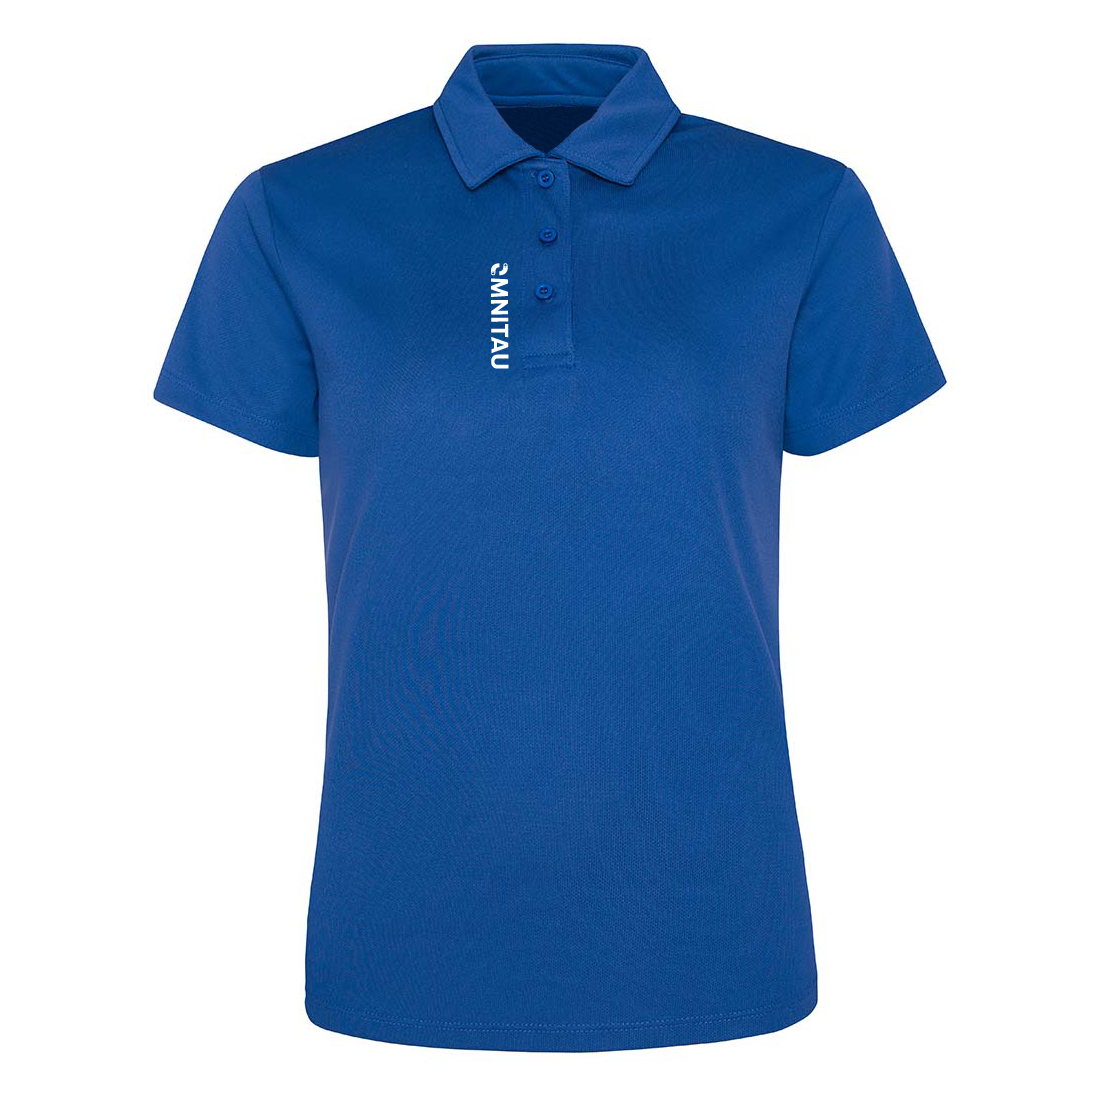 Omnitau Women's Sustainable Breathable Classic Golf Polo Shirt - Royal Blue